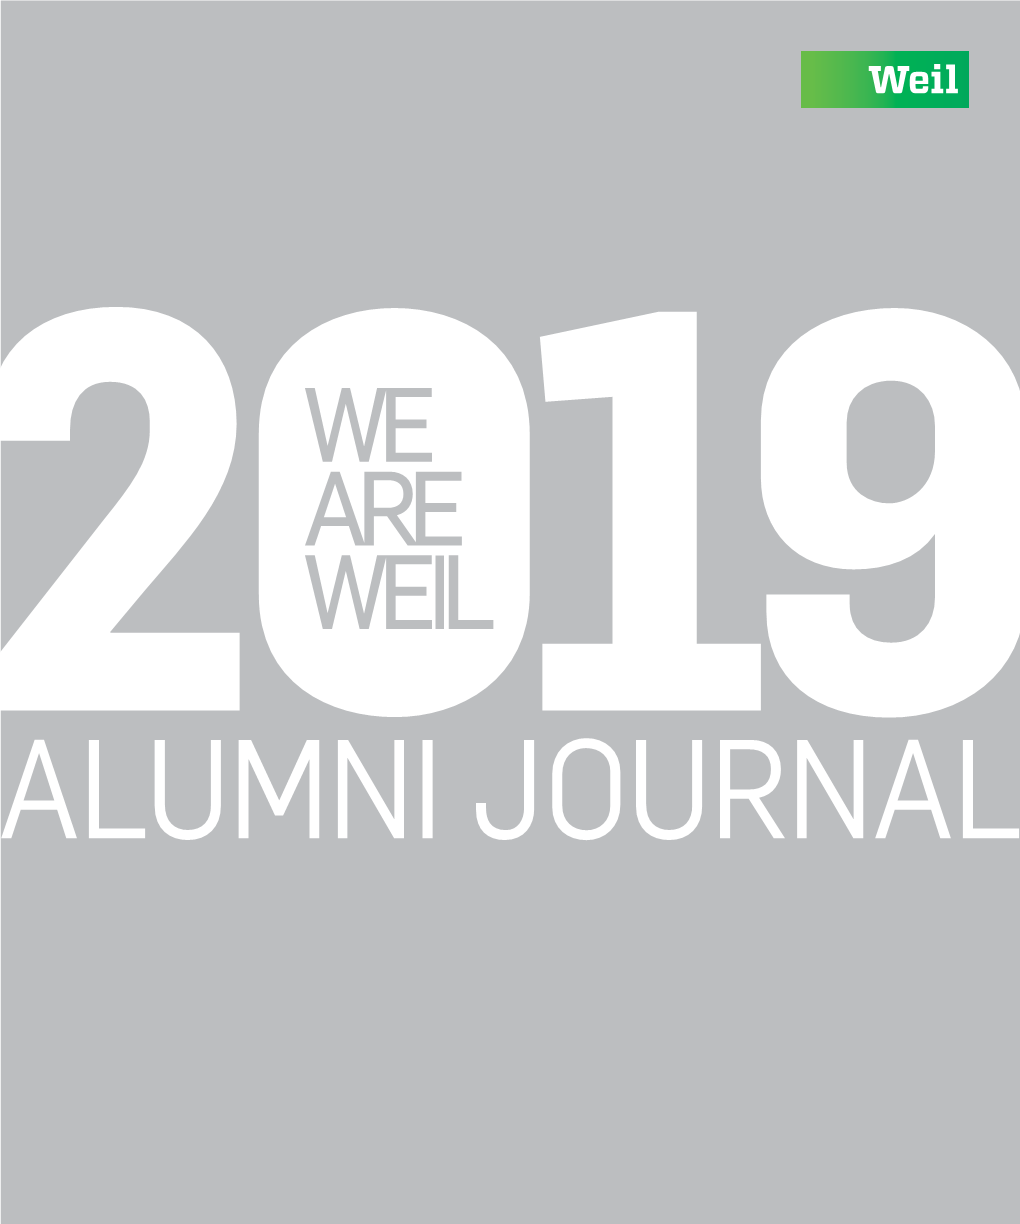 2019 Alumni Journal